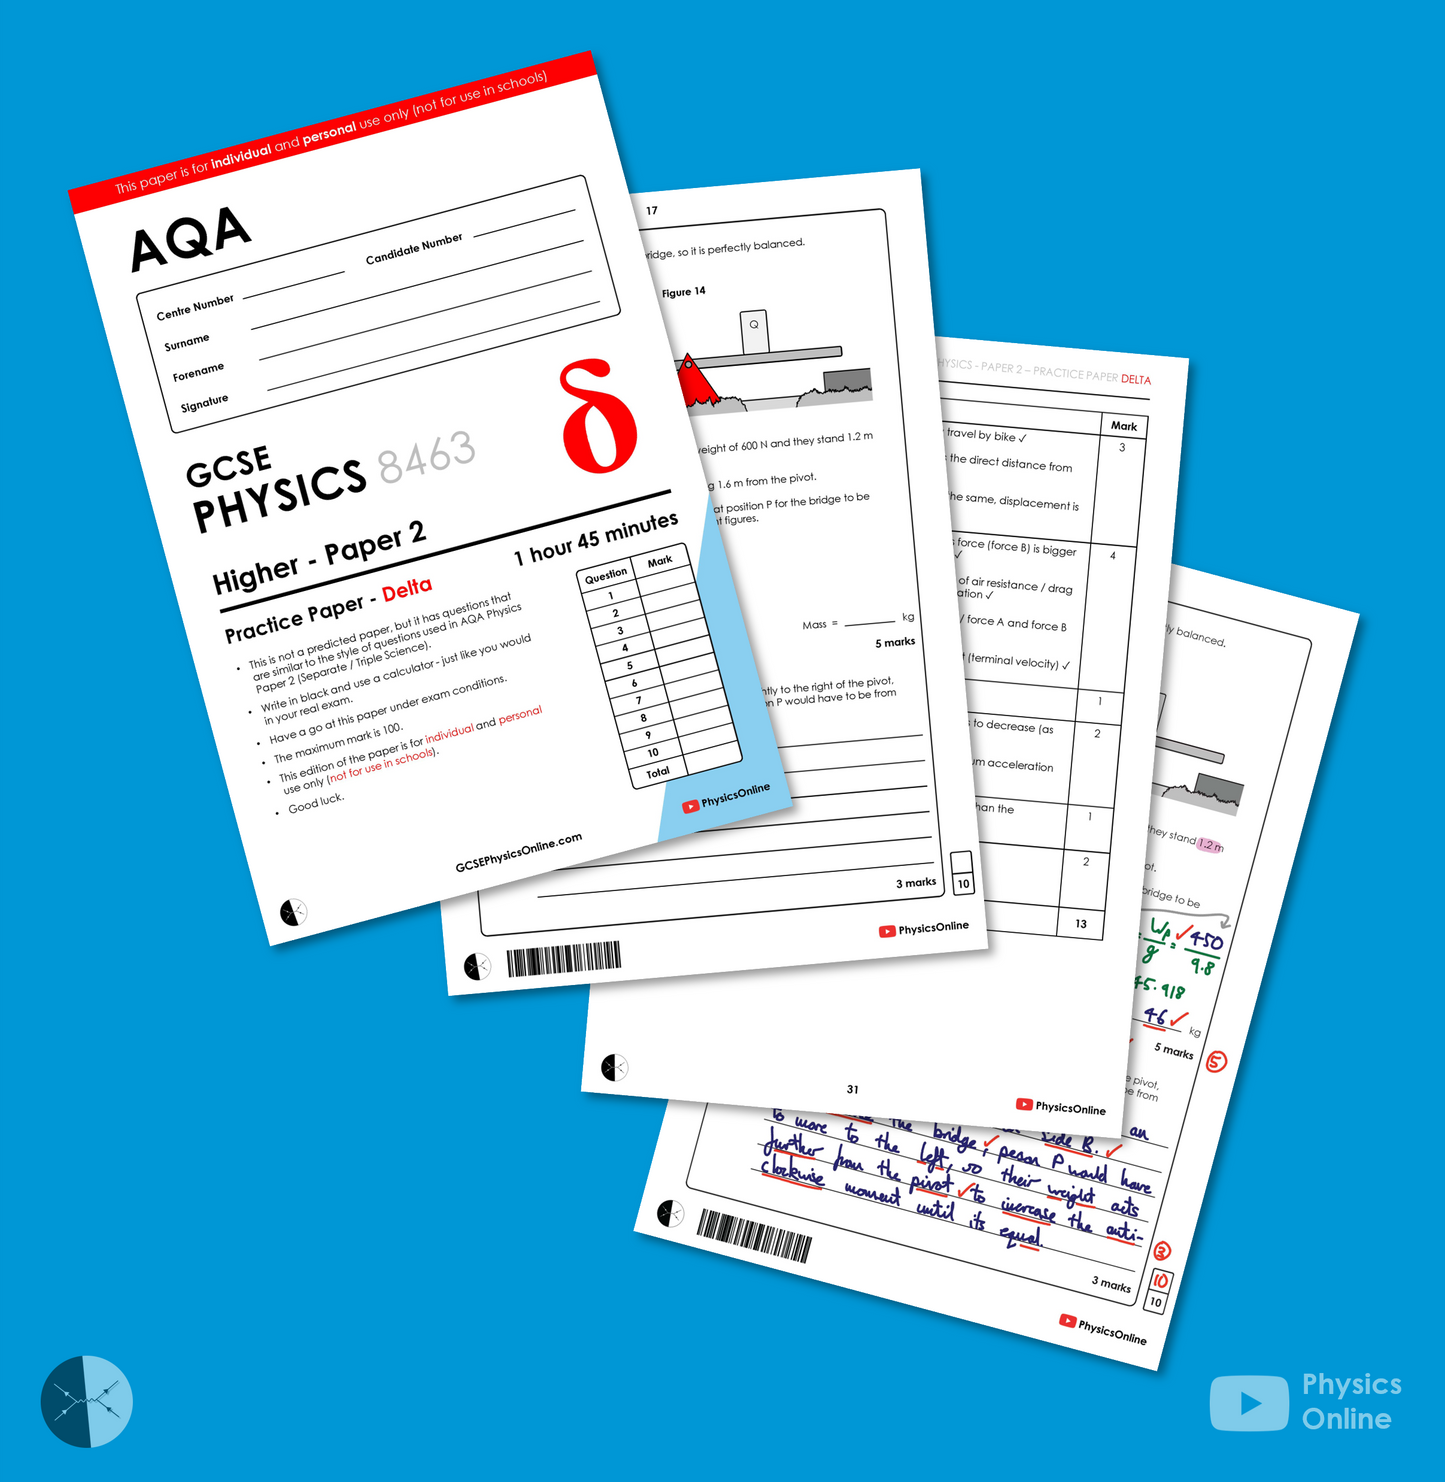 AQA Practice Paper | Paper 2 - Delta | Individual Issue | GCSE Physics